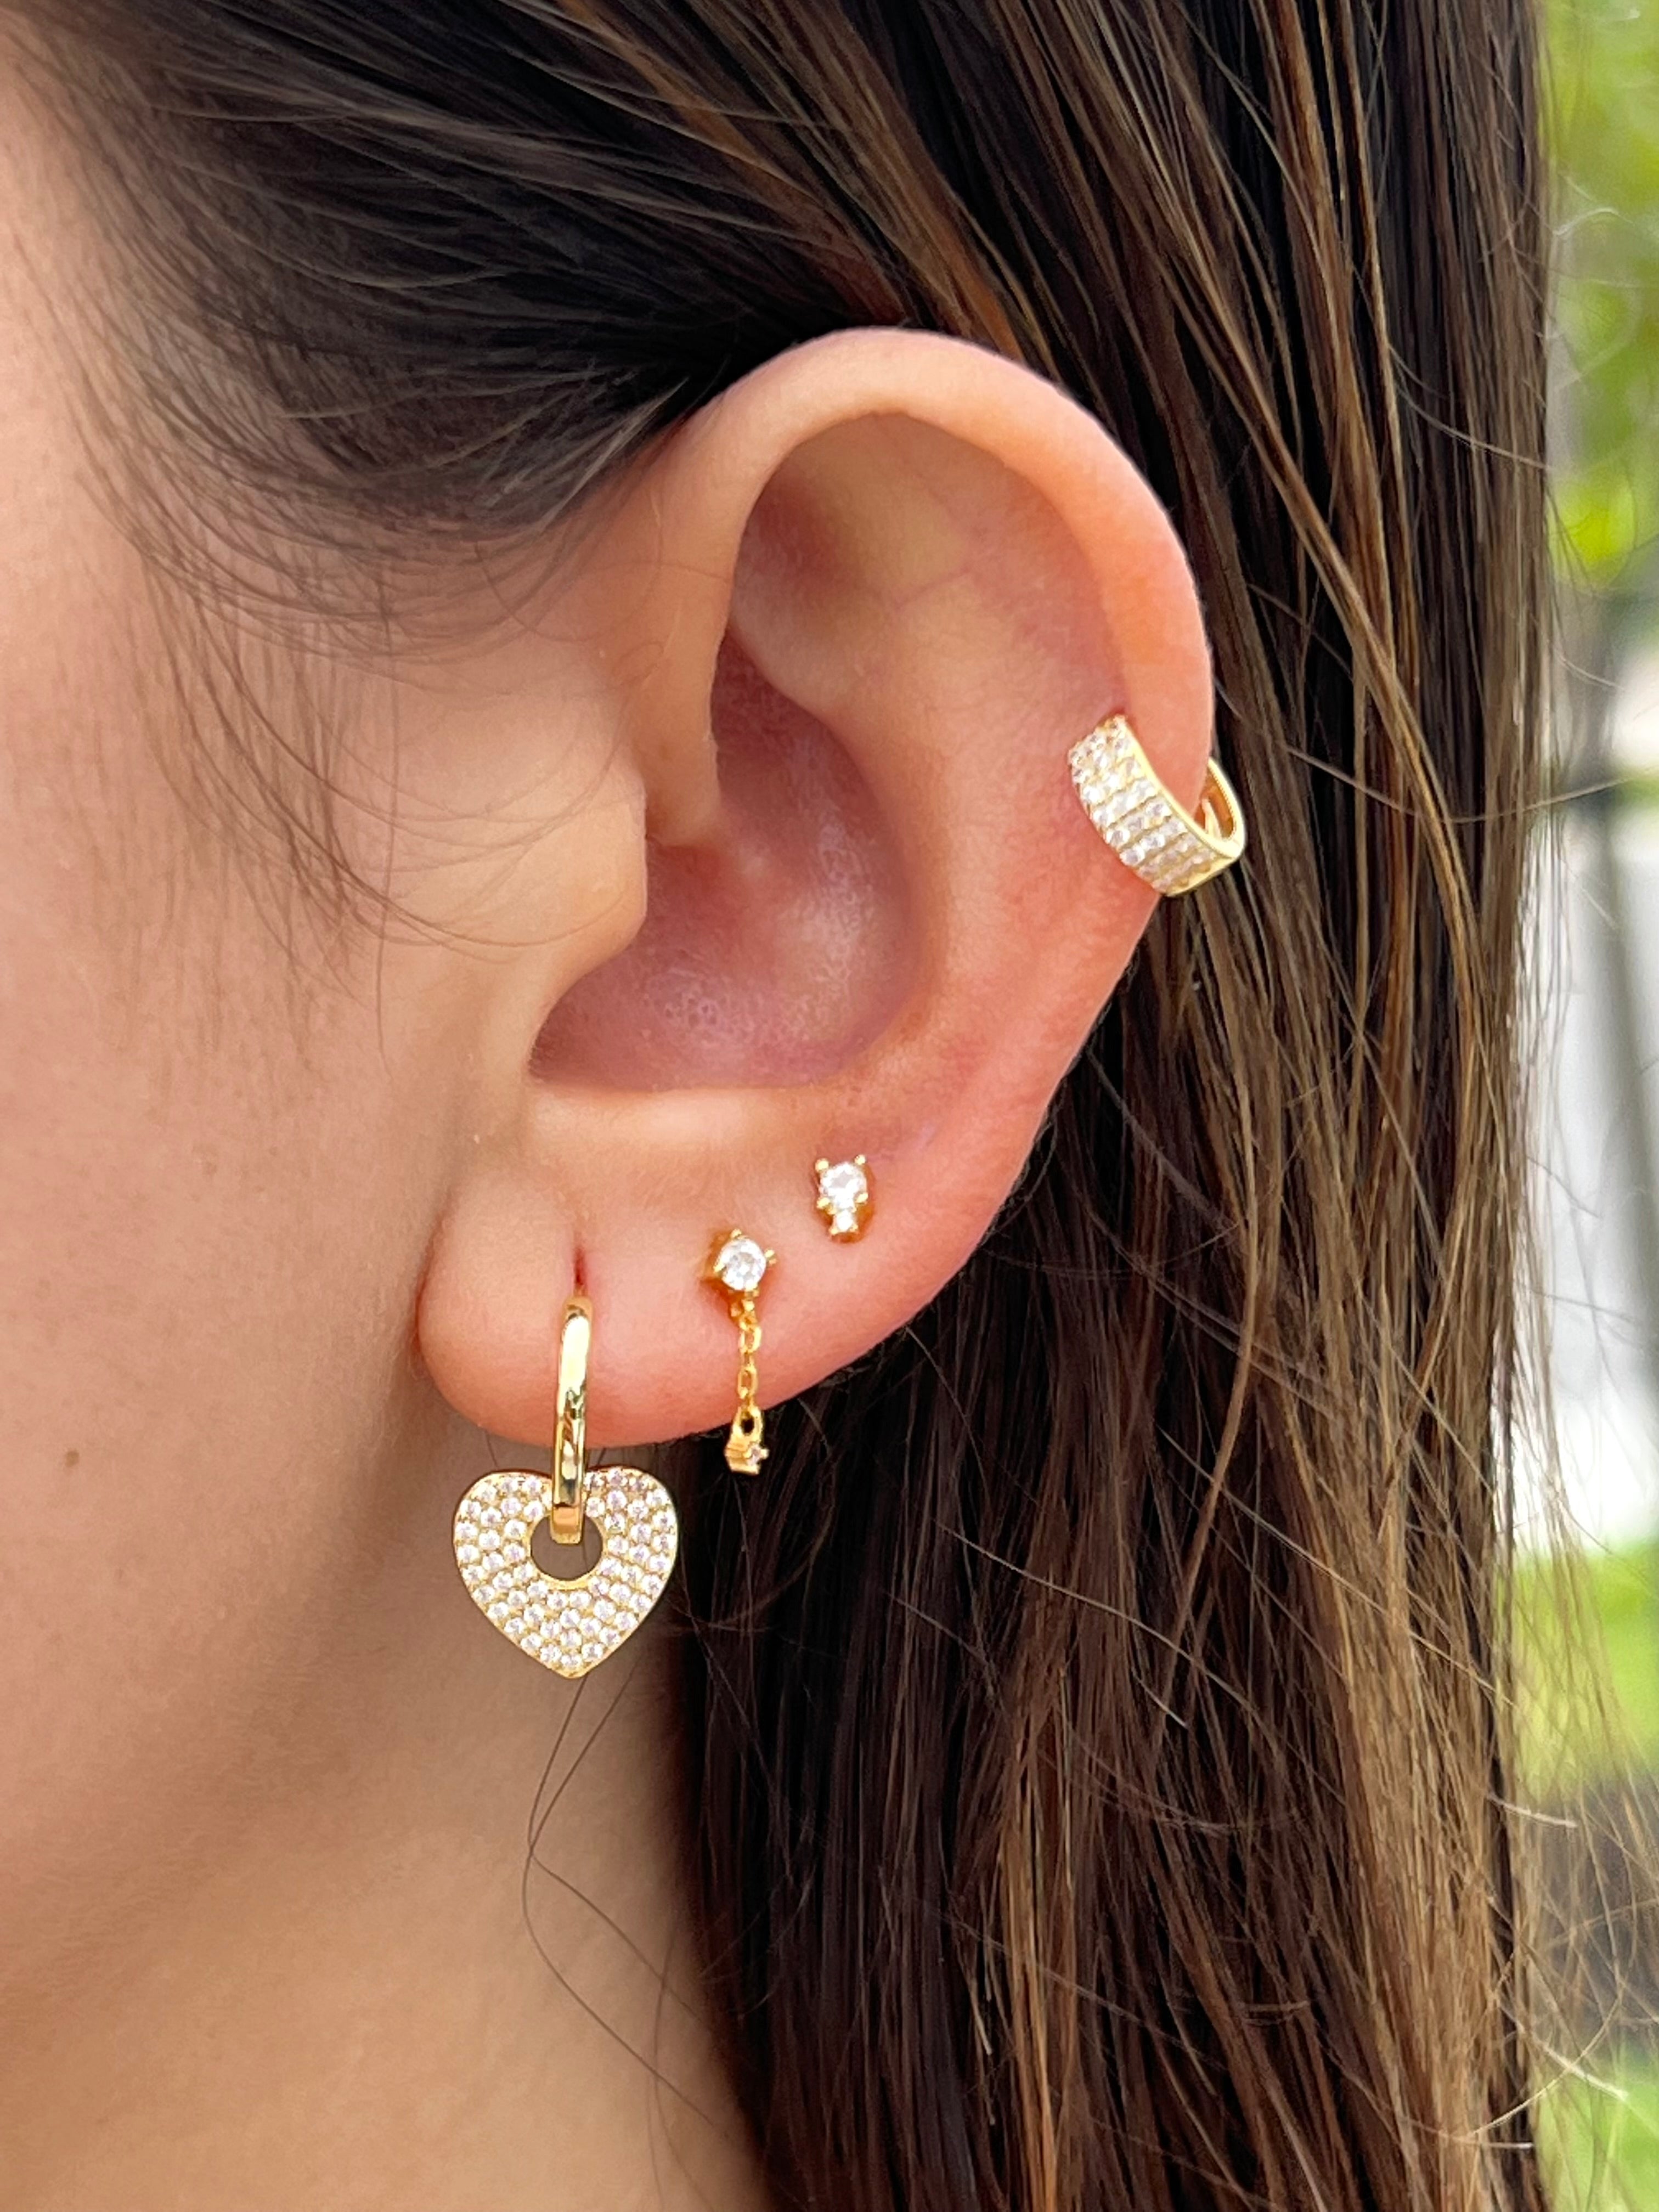 Shiny Heart earrings